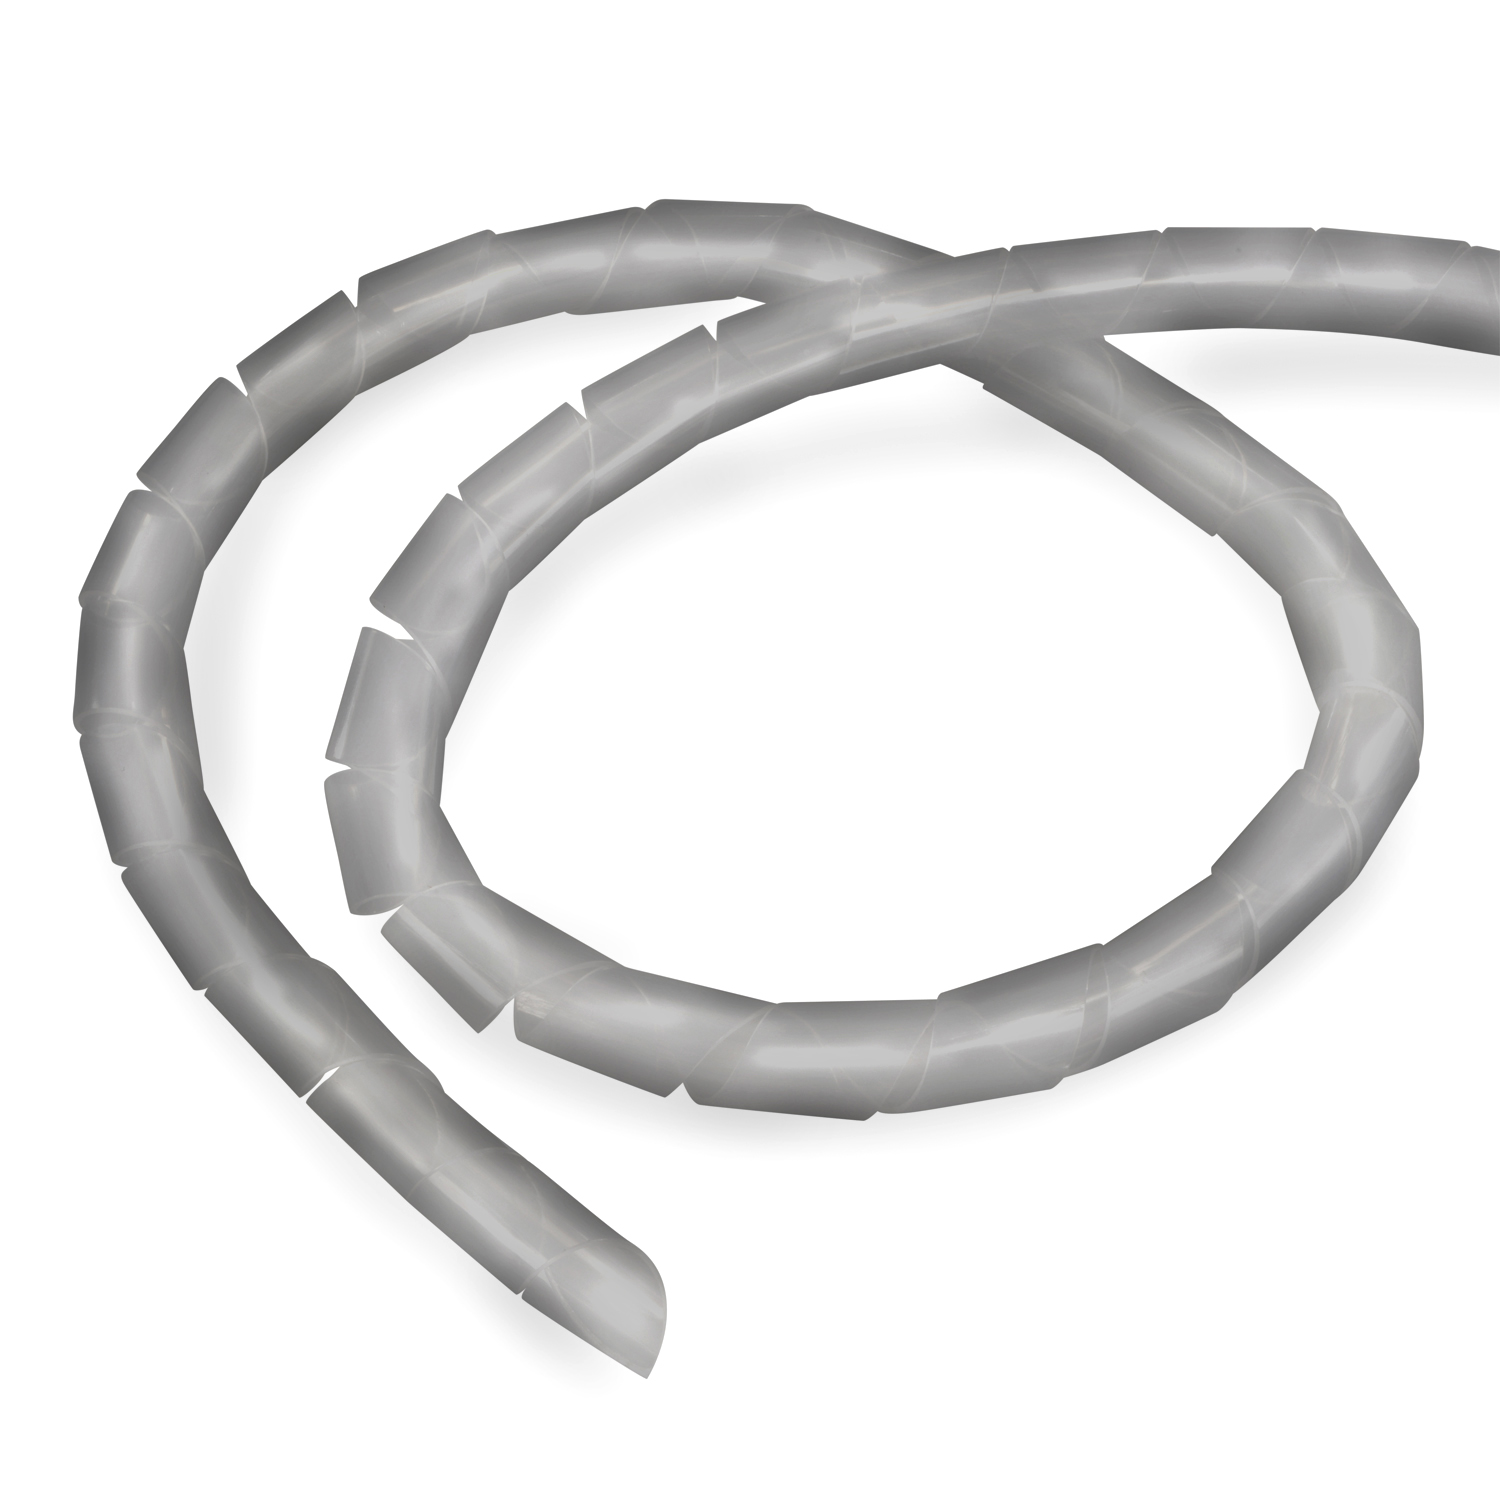 TPFNET 3er Pack Premium Spiral-Kabelschlauch Silber, 12-75mm, 10m Silber Kabelschlauch